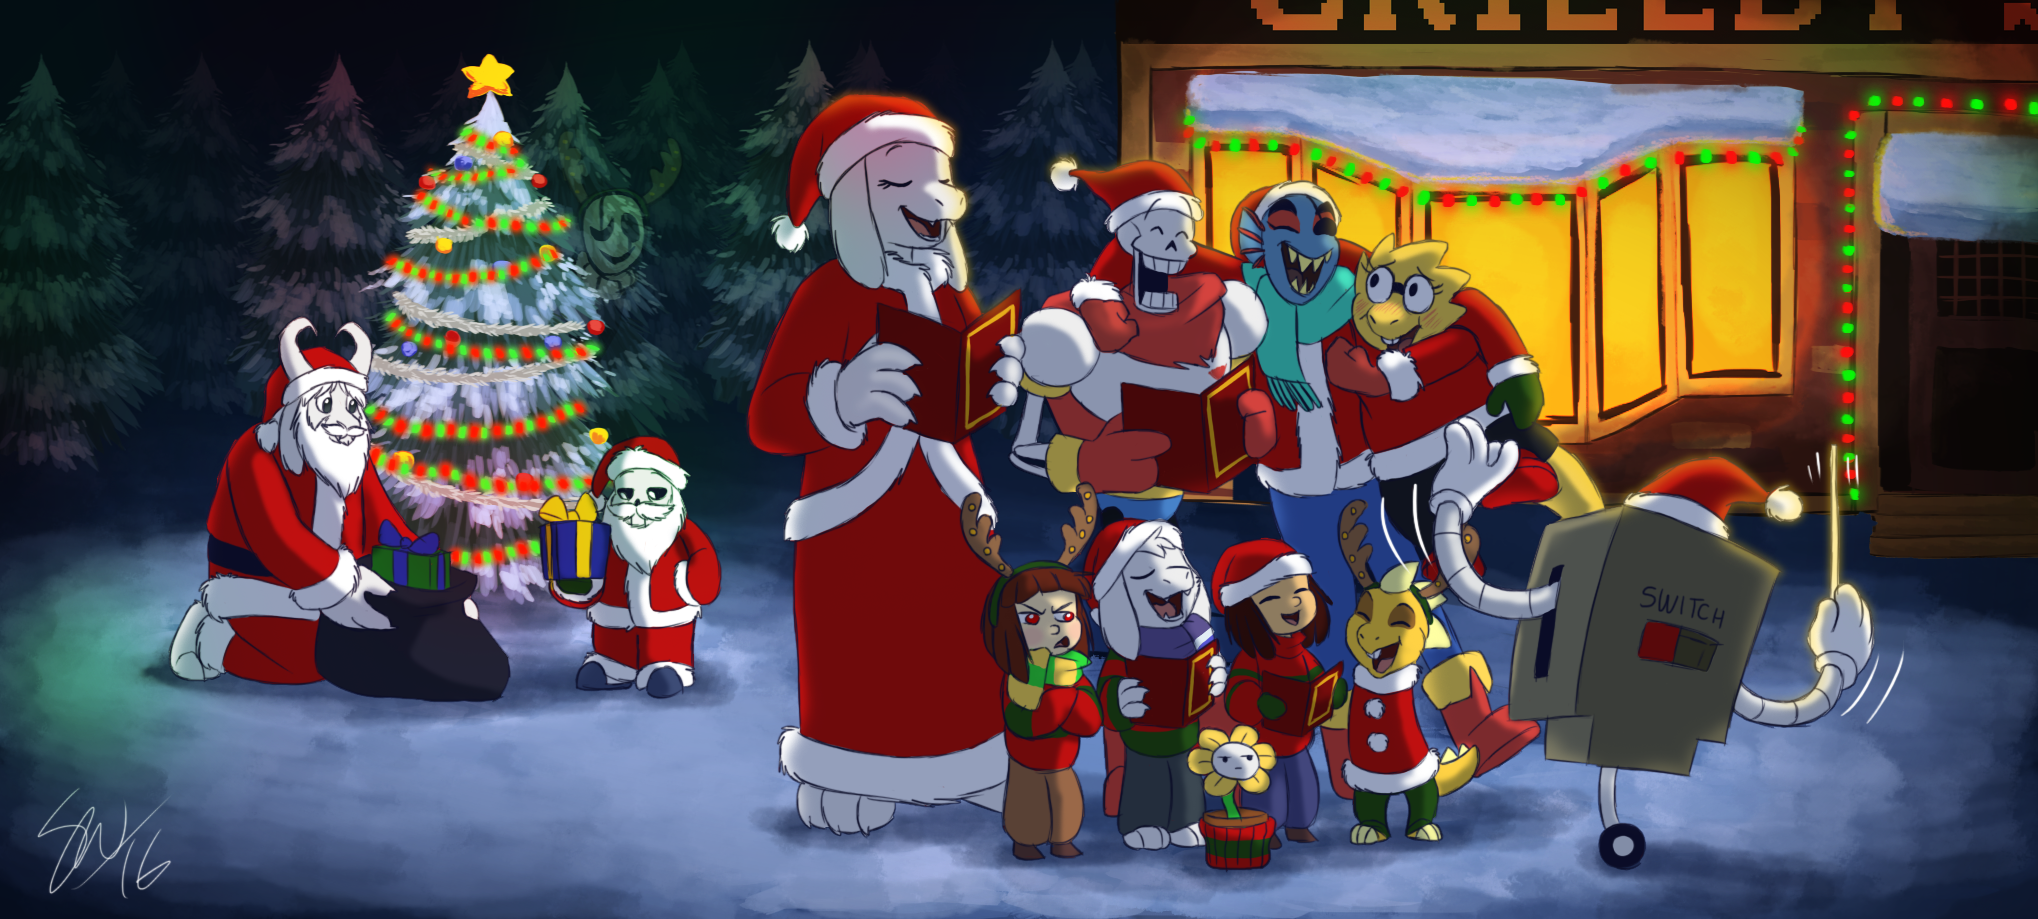 Undertale Christmas Background - HD Wallpaper 